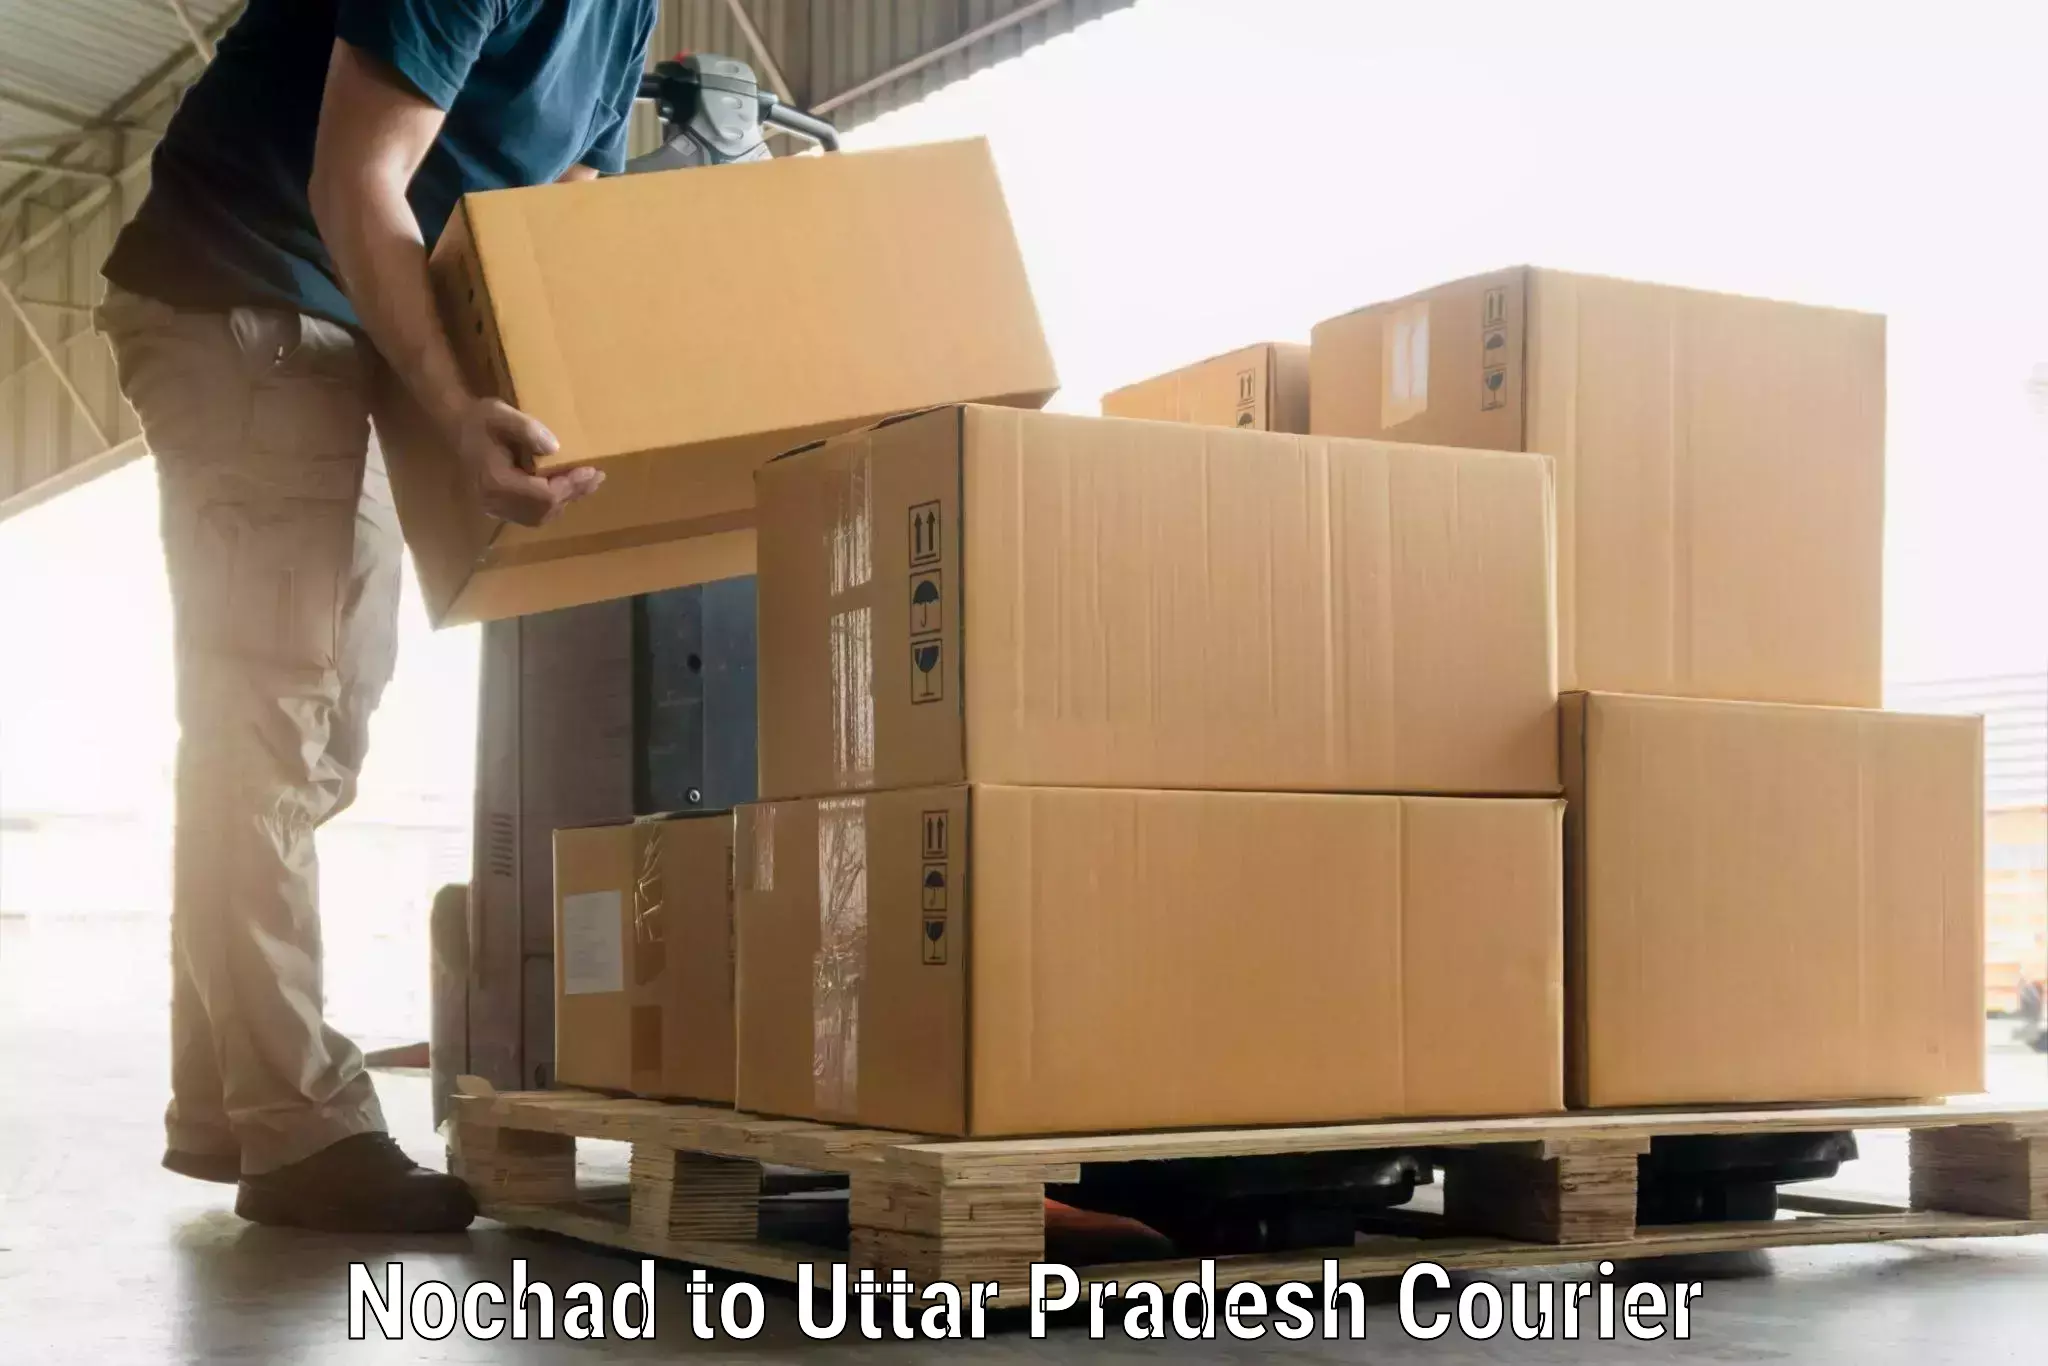 Luggage transport consultancy Nochad to Uttar Pradesh